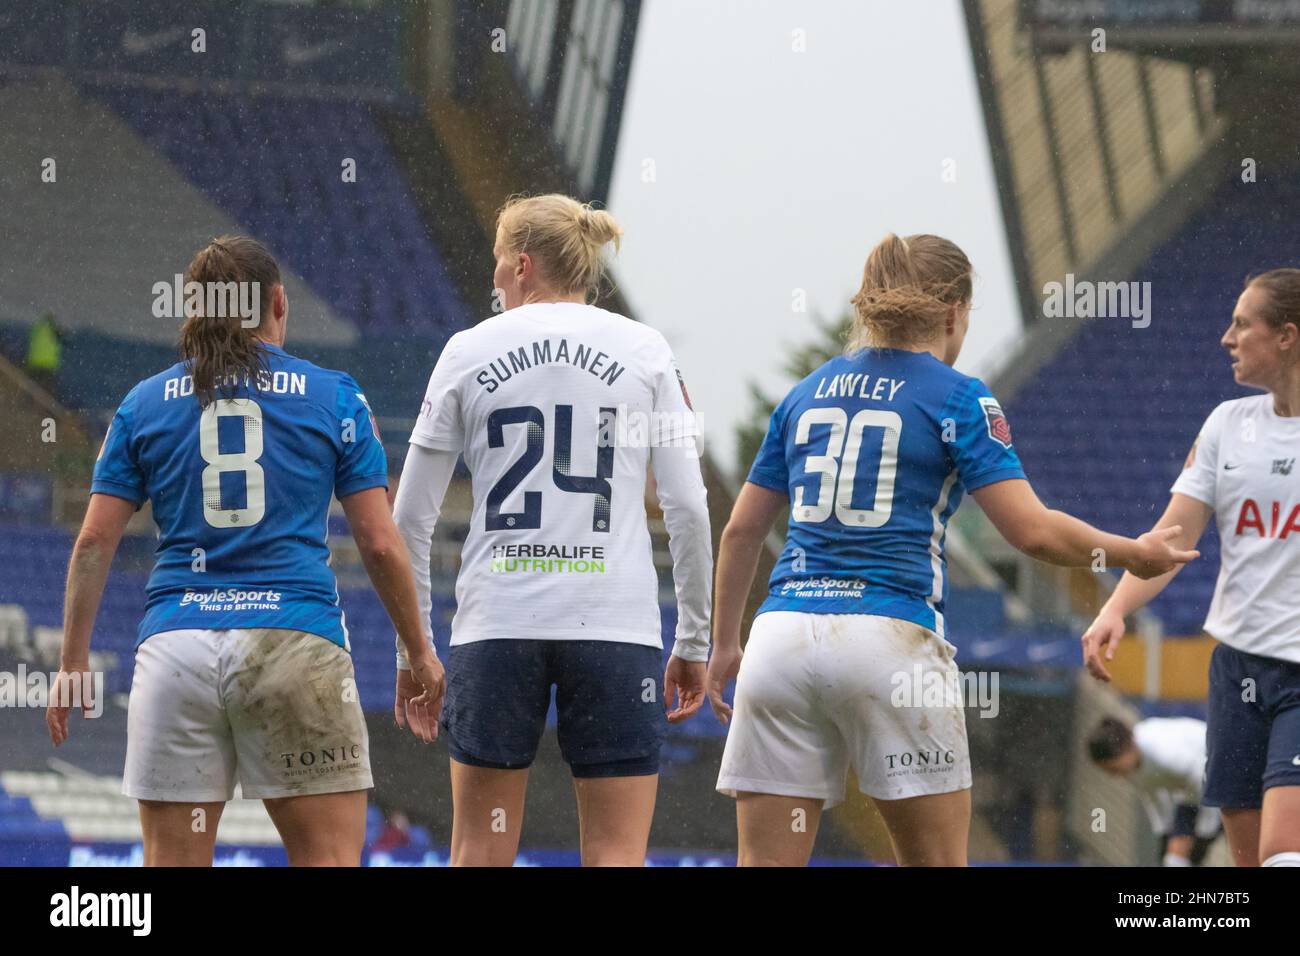 Lisa Robertson, Gemma Lawley of Birmingham City and Eveliina Summanen of Tottenham Hotspur waiting for the ball Stock Photo